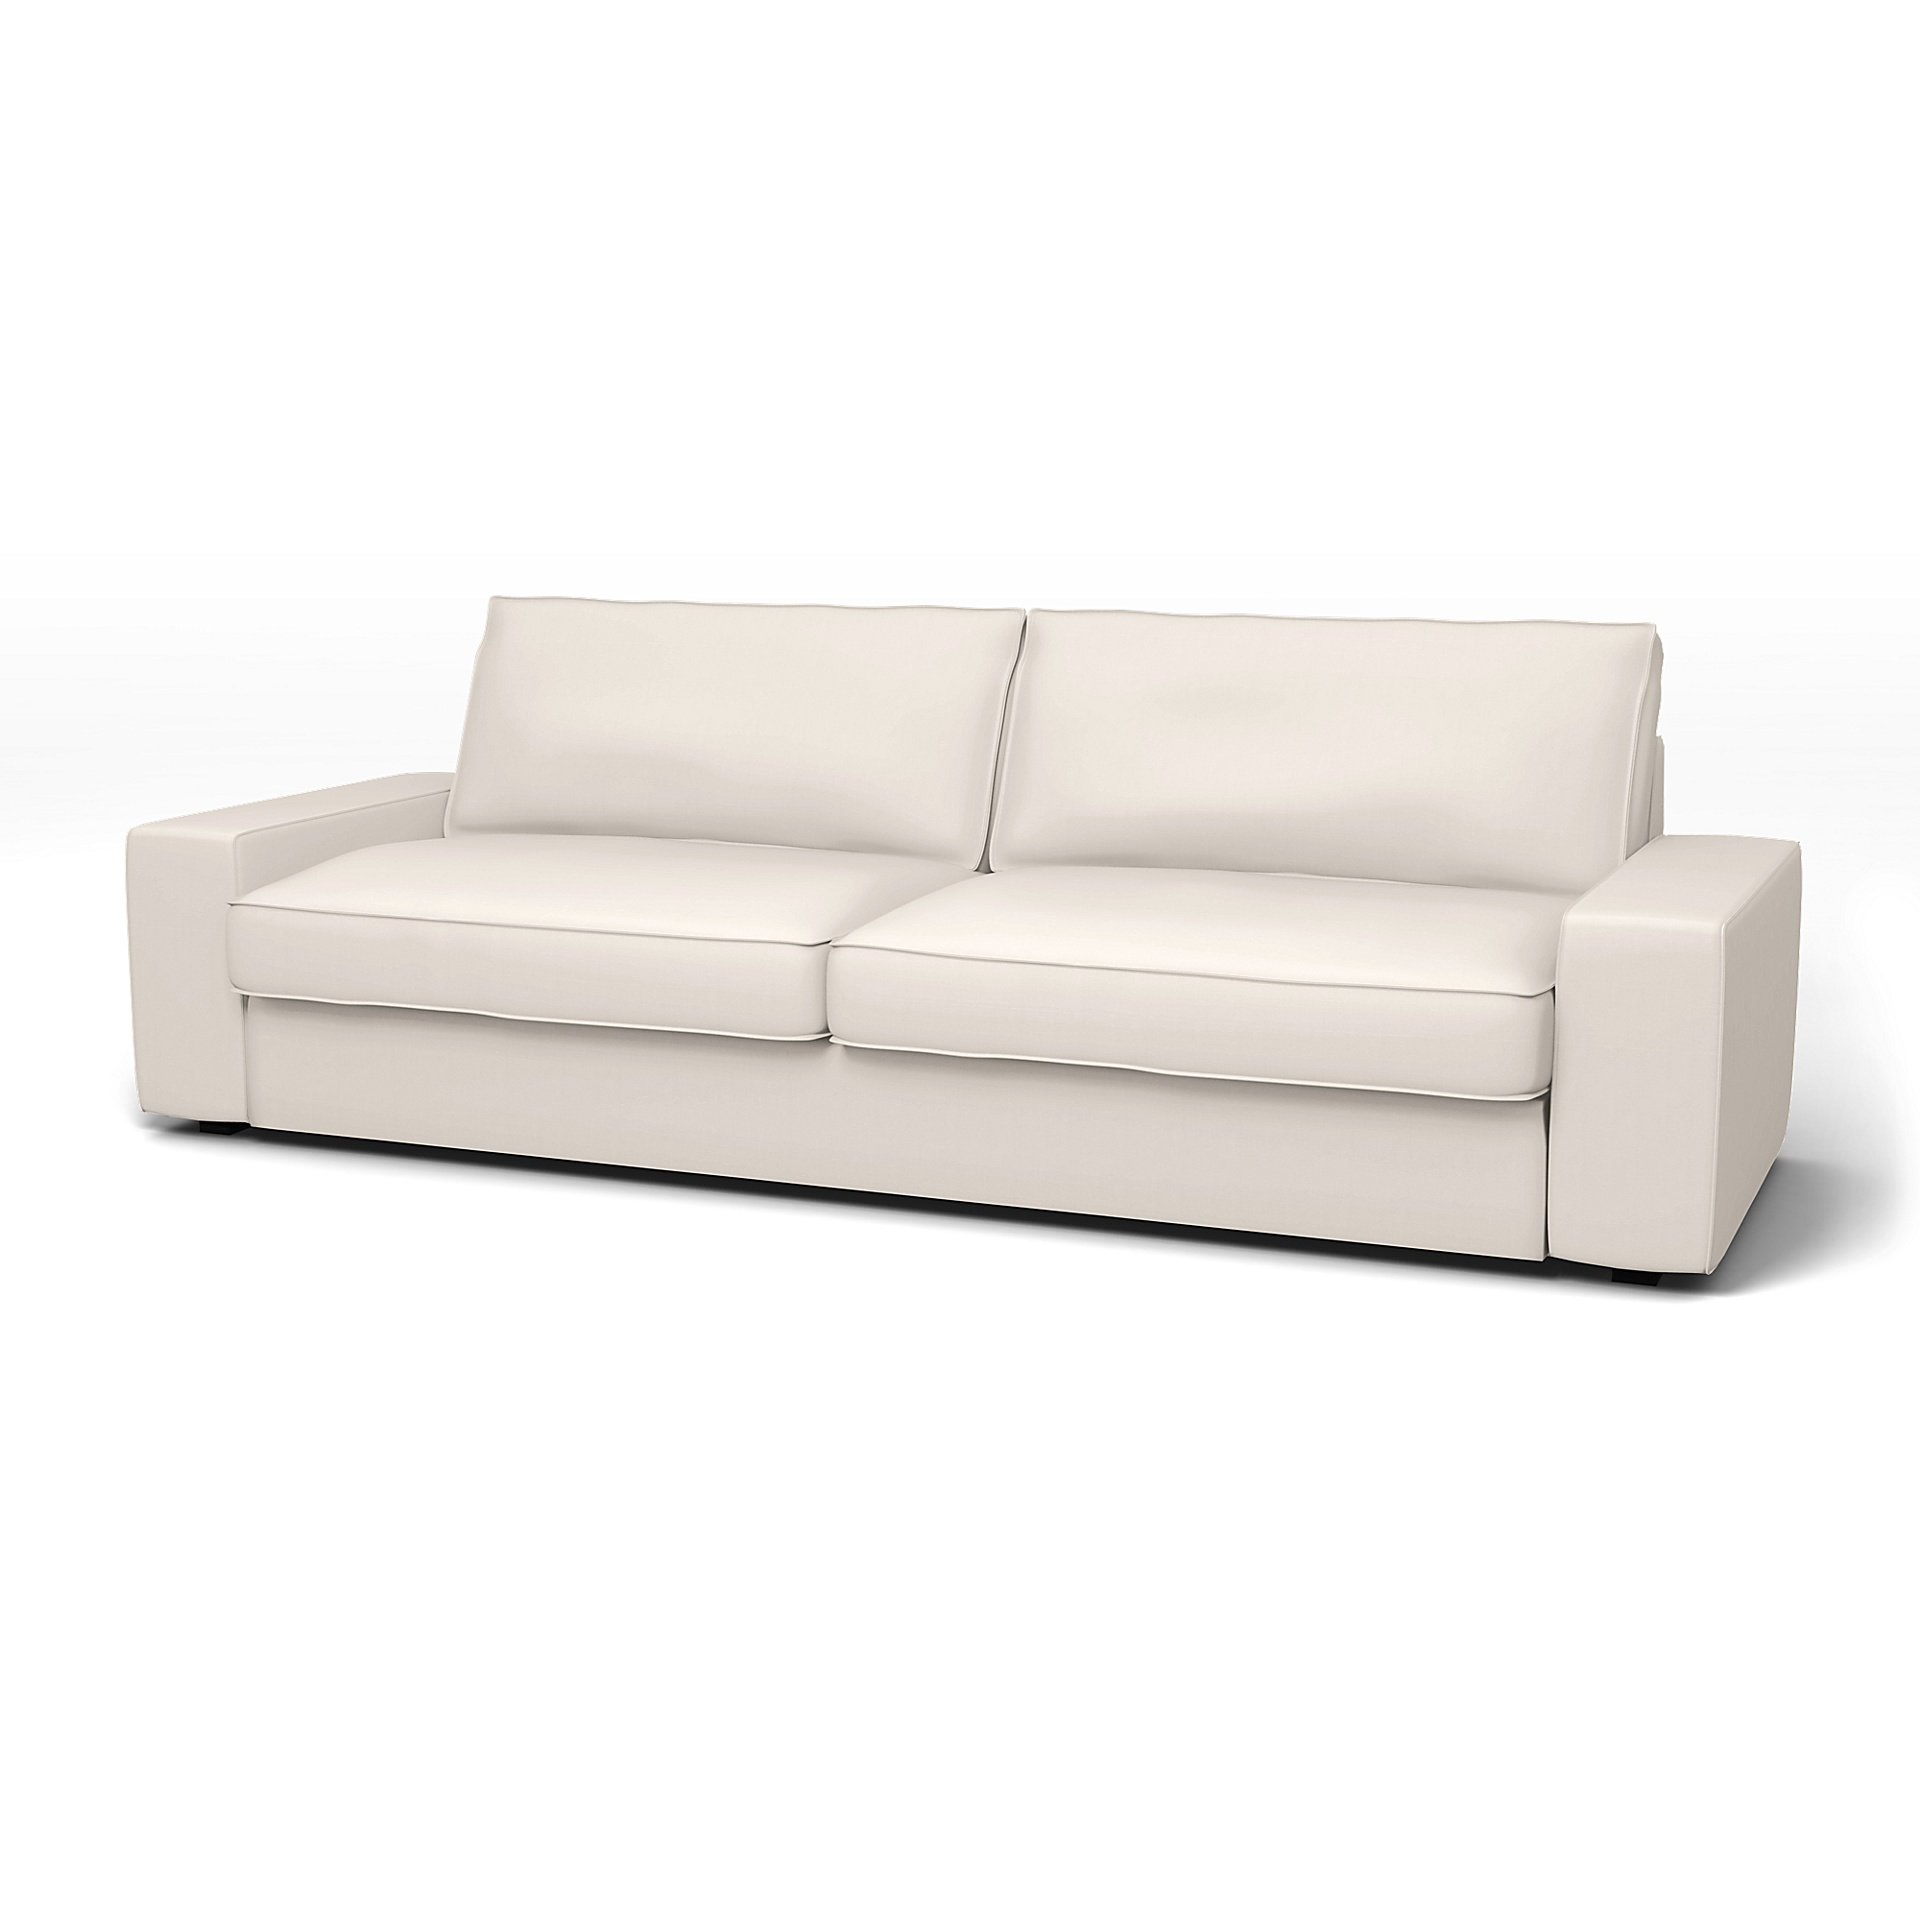 IKEA - Kivik Sofa Bed Cover, Soft White, Cotton - Bemz